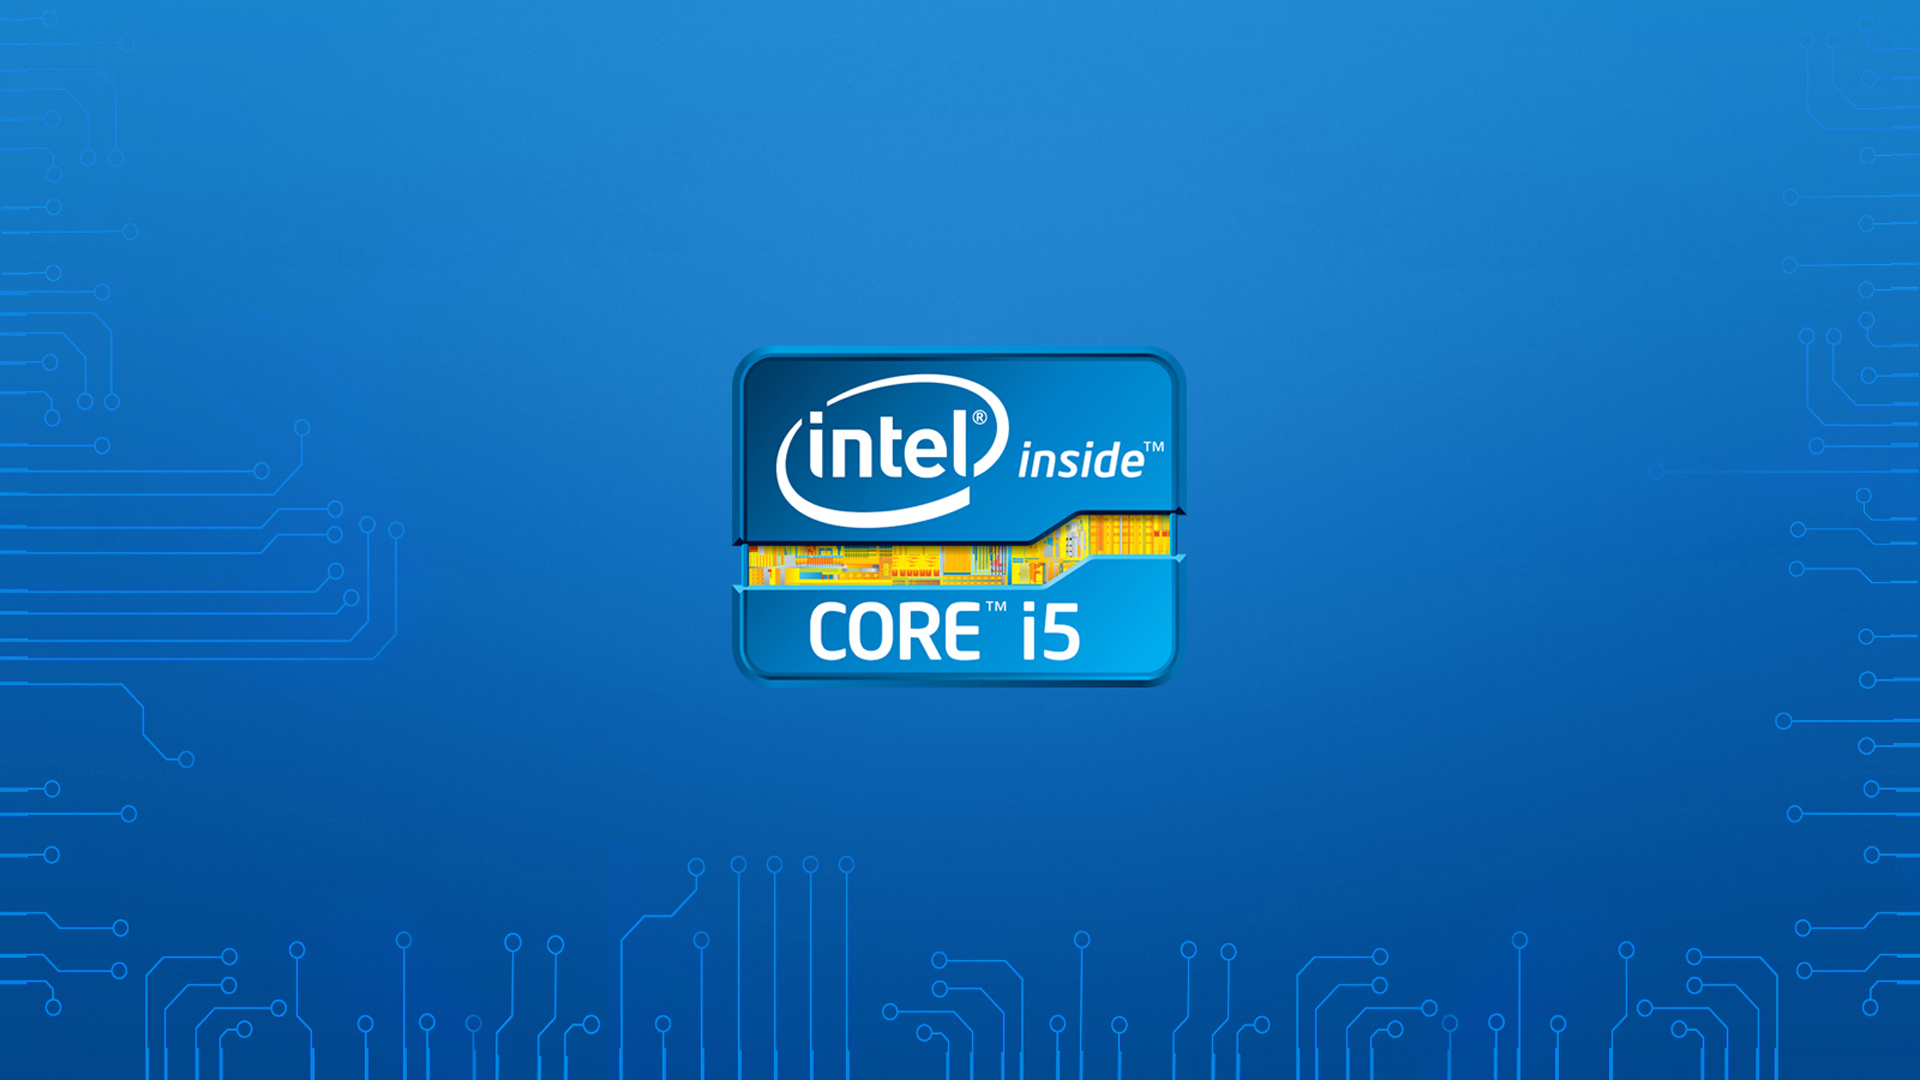 Download Wallpaper Logo Intel Hitech Intel I5 Section Hi Tech In Resolution 19x1080